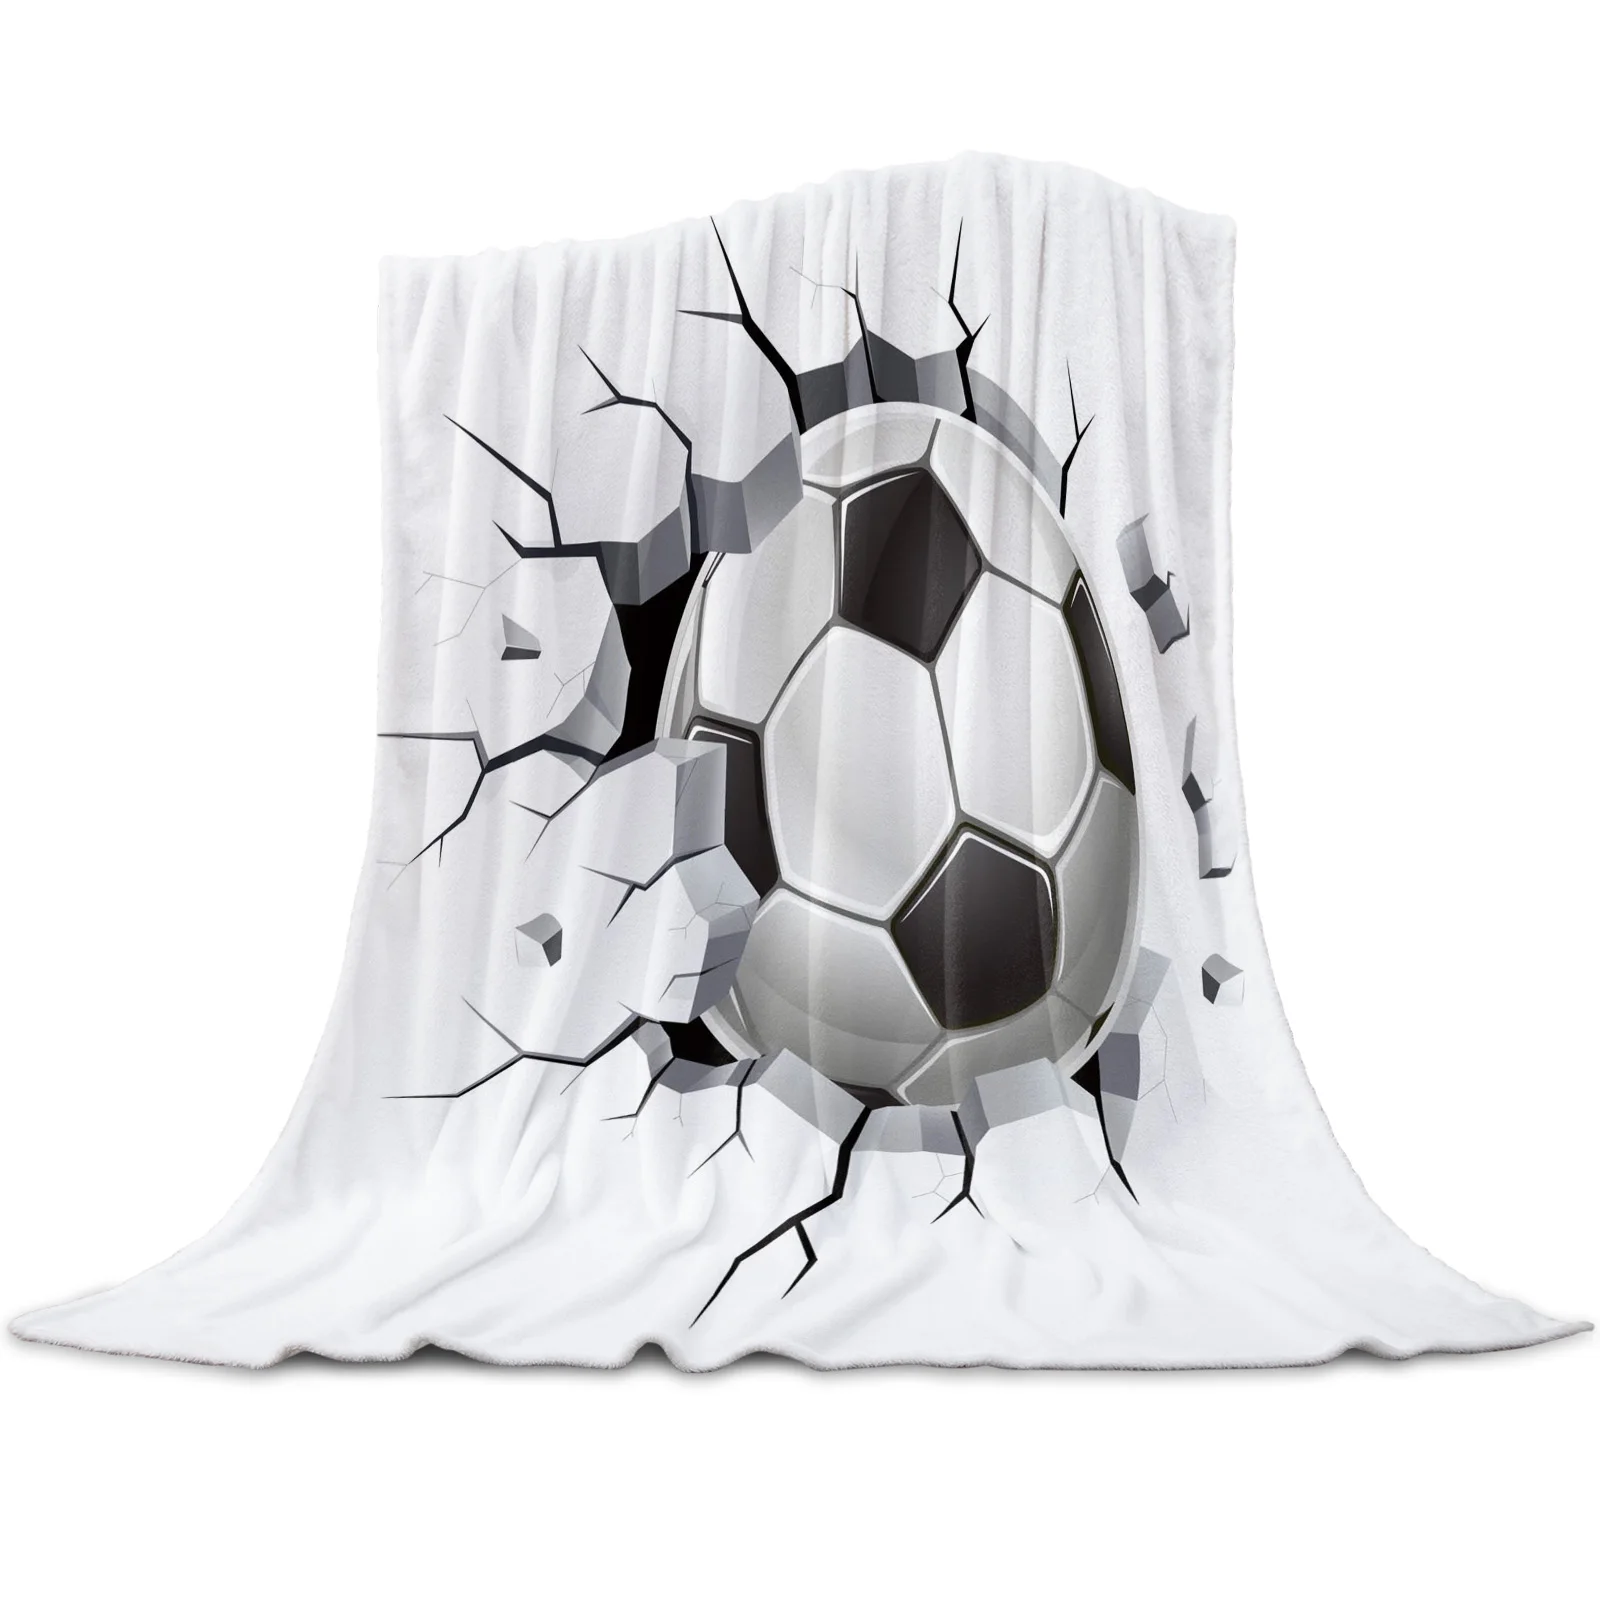 

Flannel Blankets Soccer Throw Blanket Balls Football Warm Throws Sofa Bed Home Bedspread Travel Fleece Blanket Design Blanket